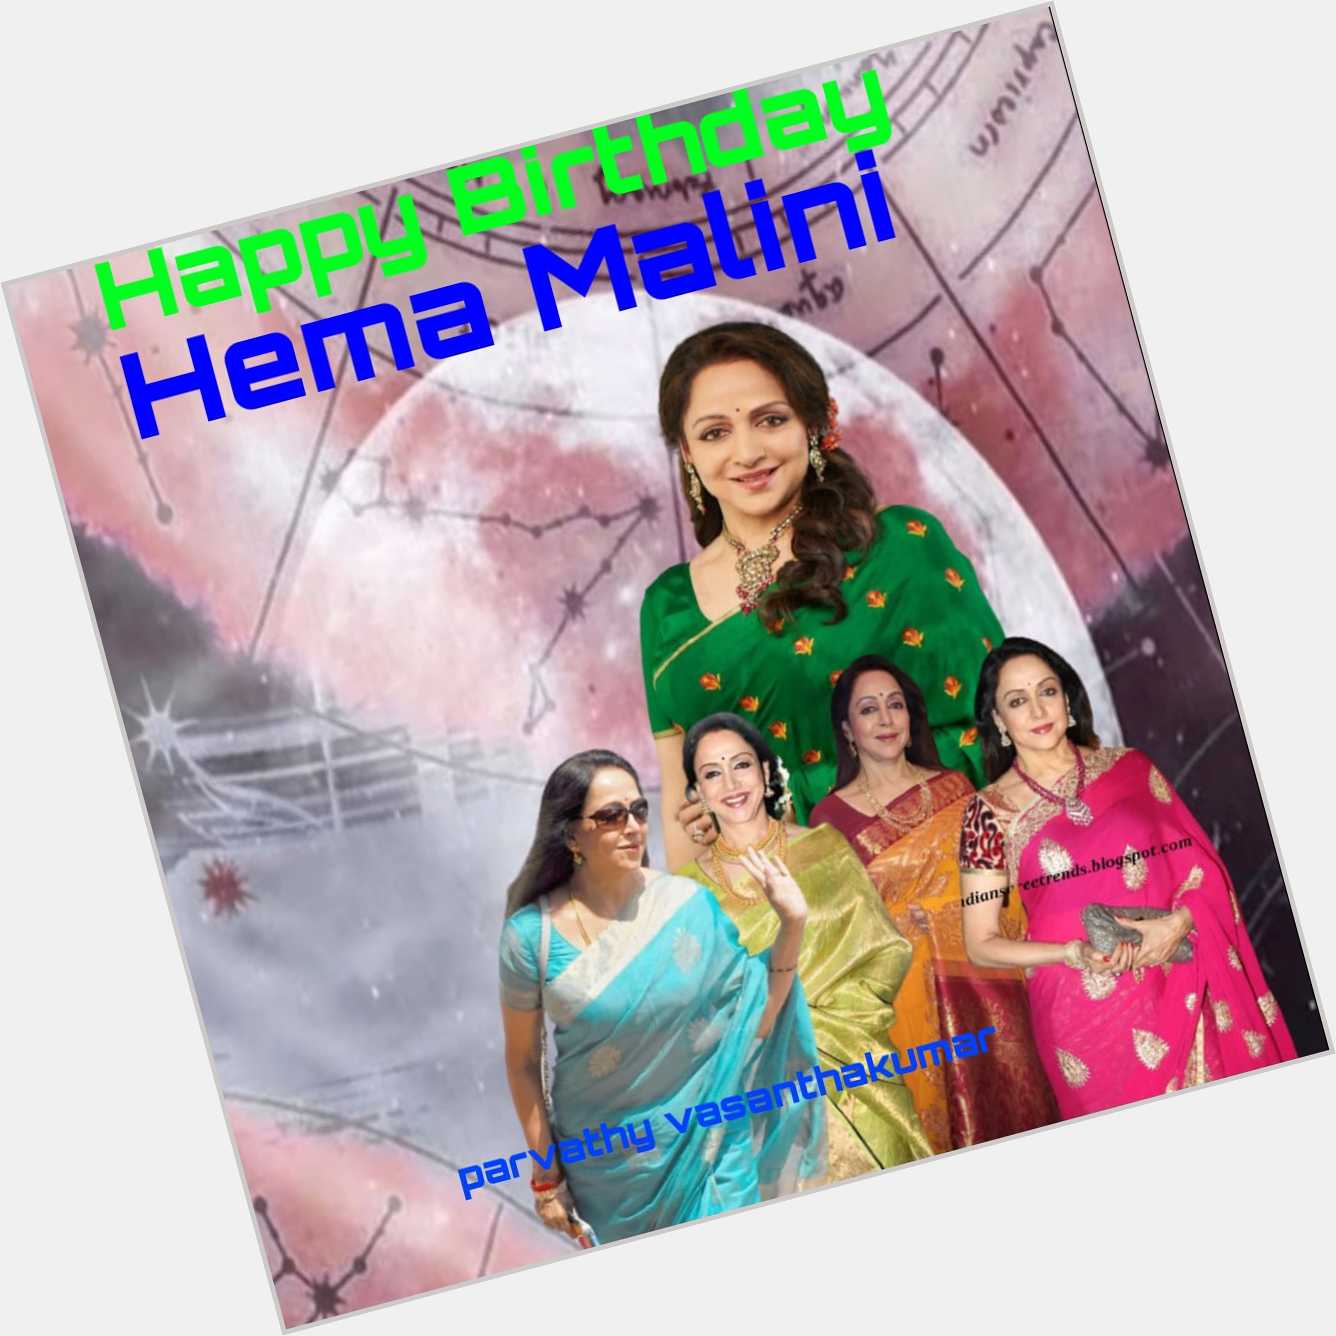 Happy birthday
Hema malini  